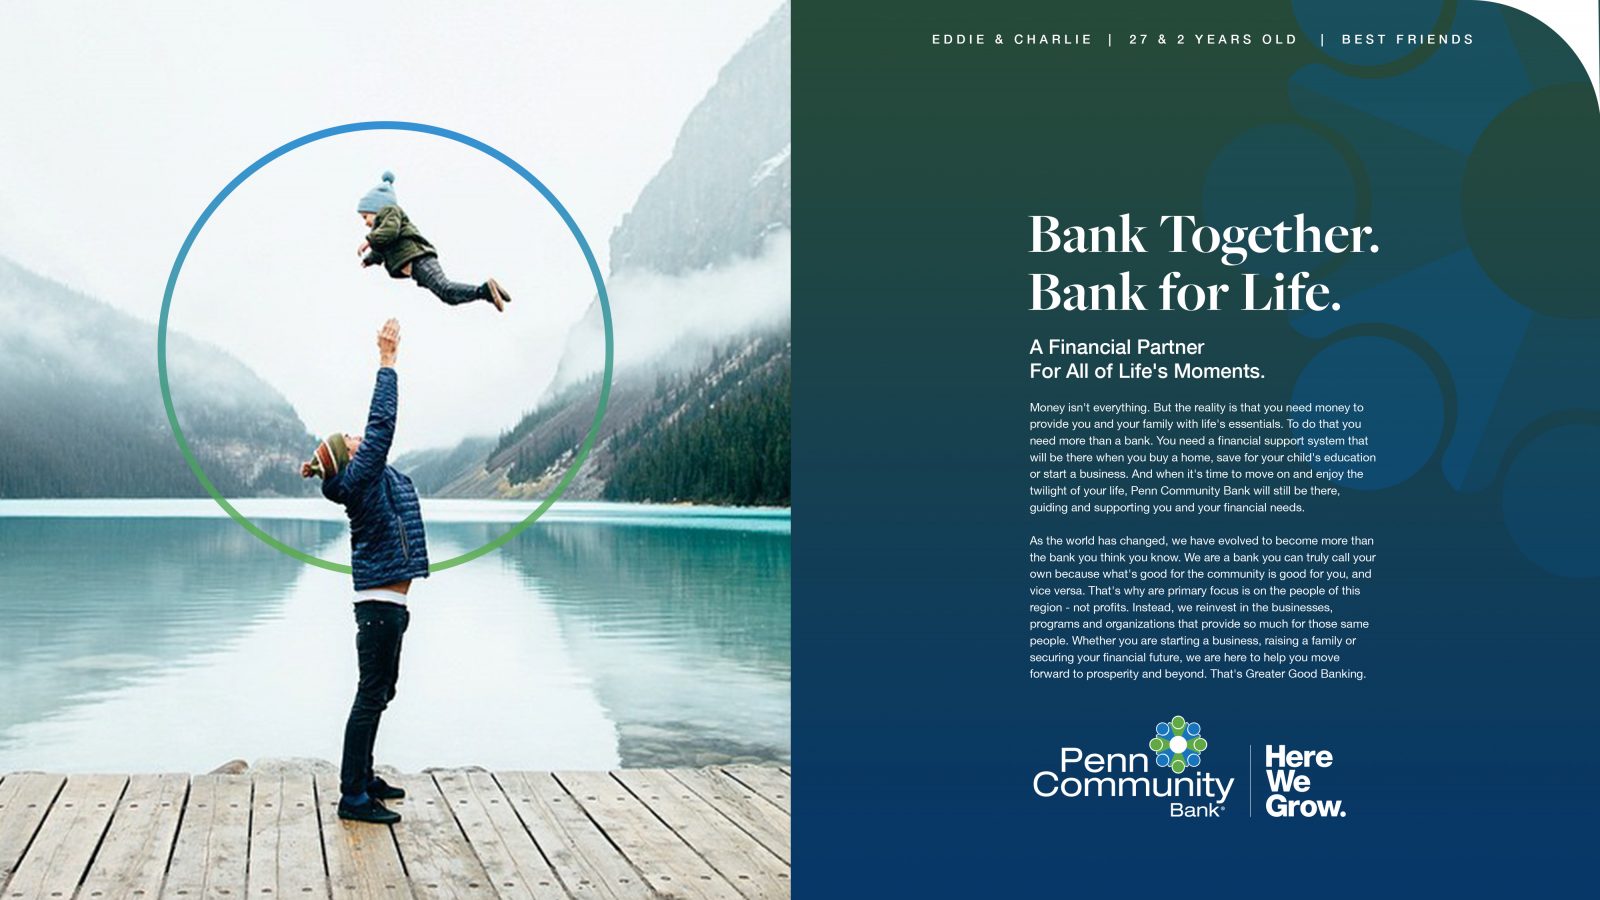 Penn Community Bank brand art